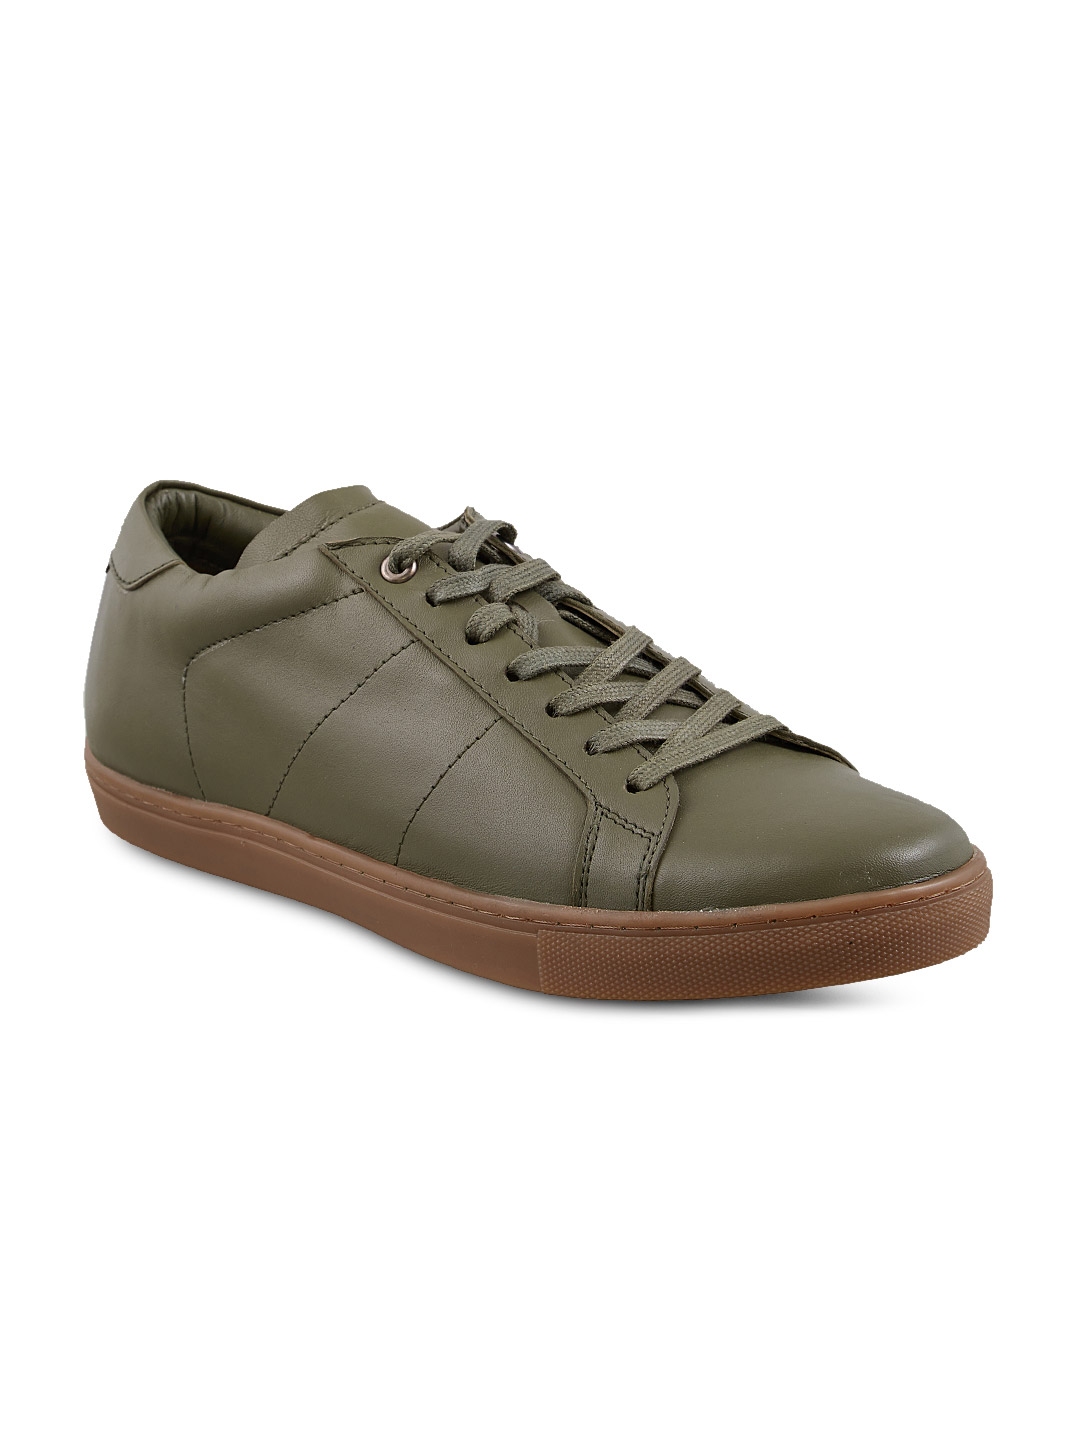 Sko Men Olive Green Sneakers